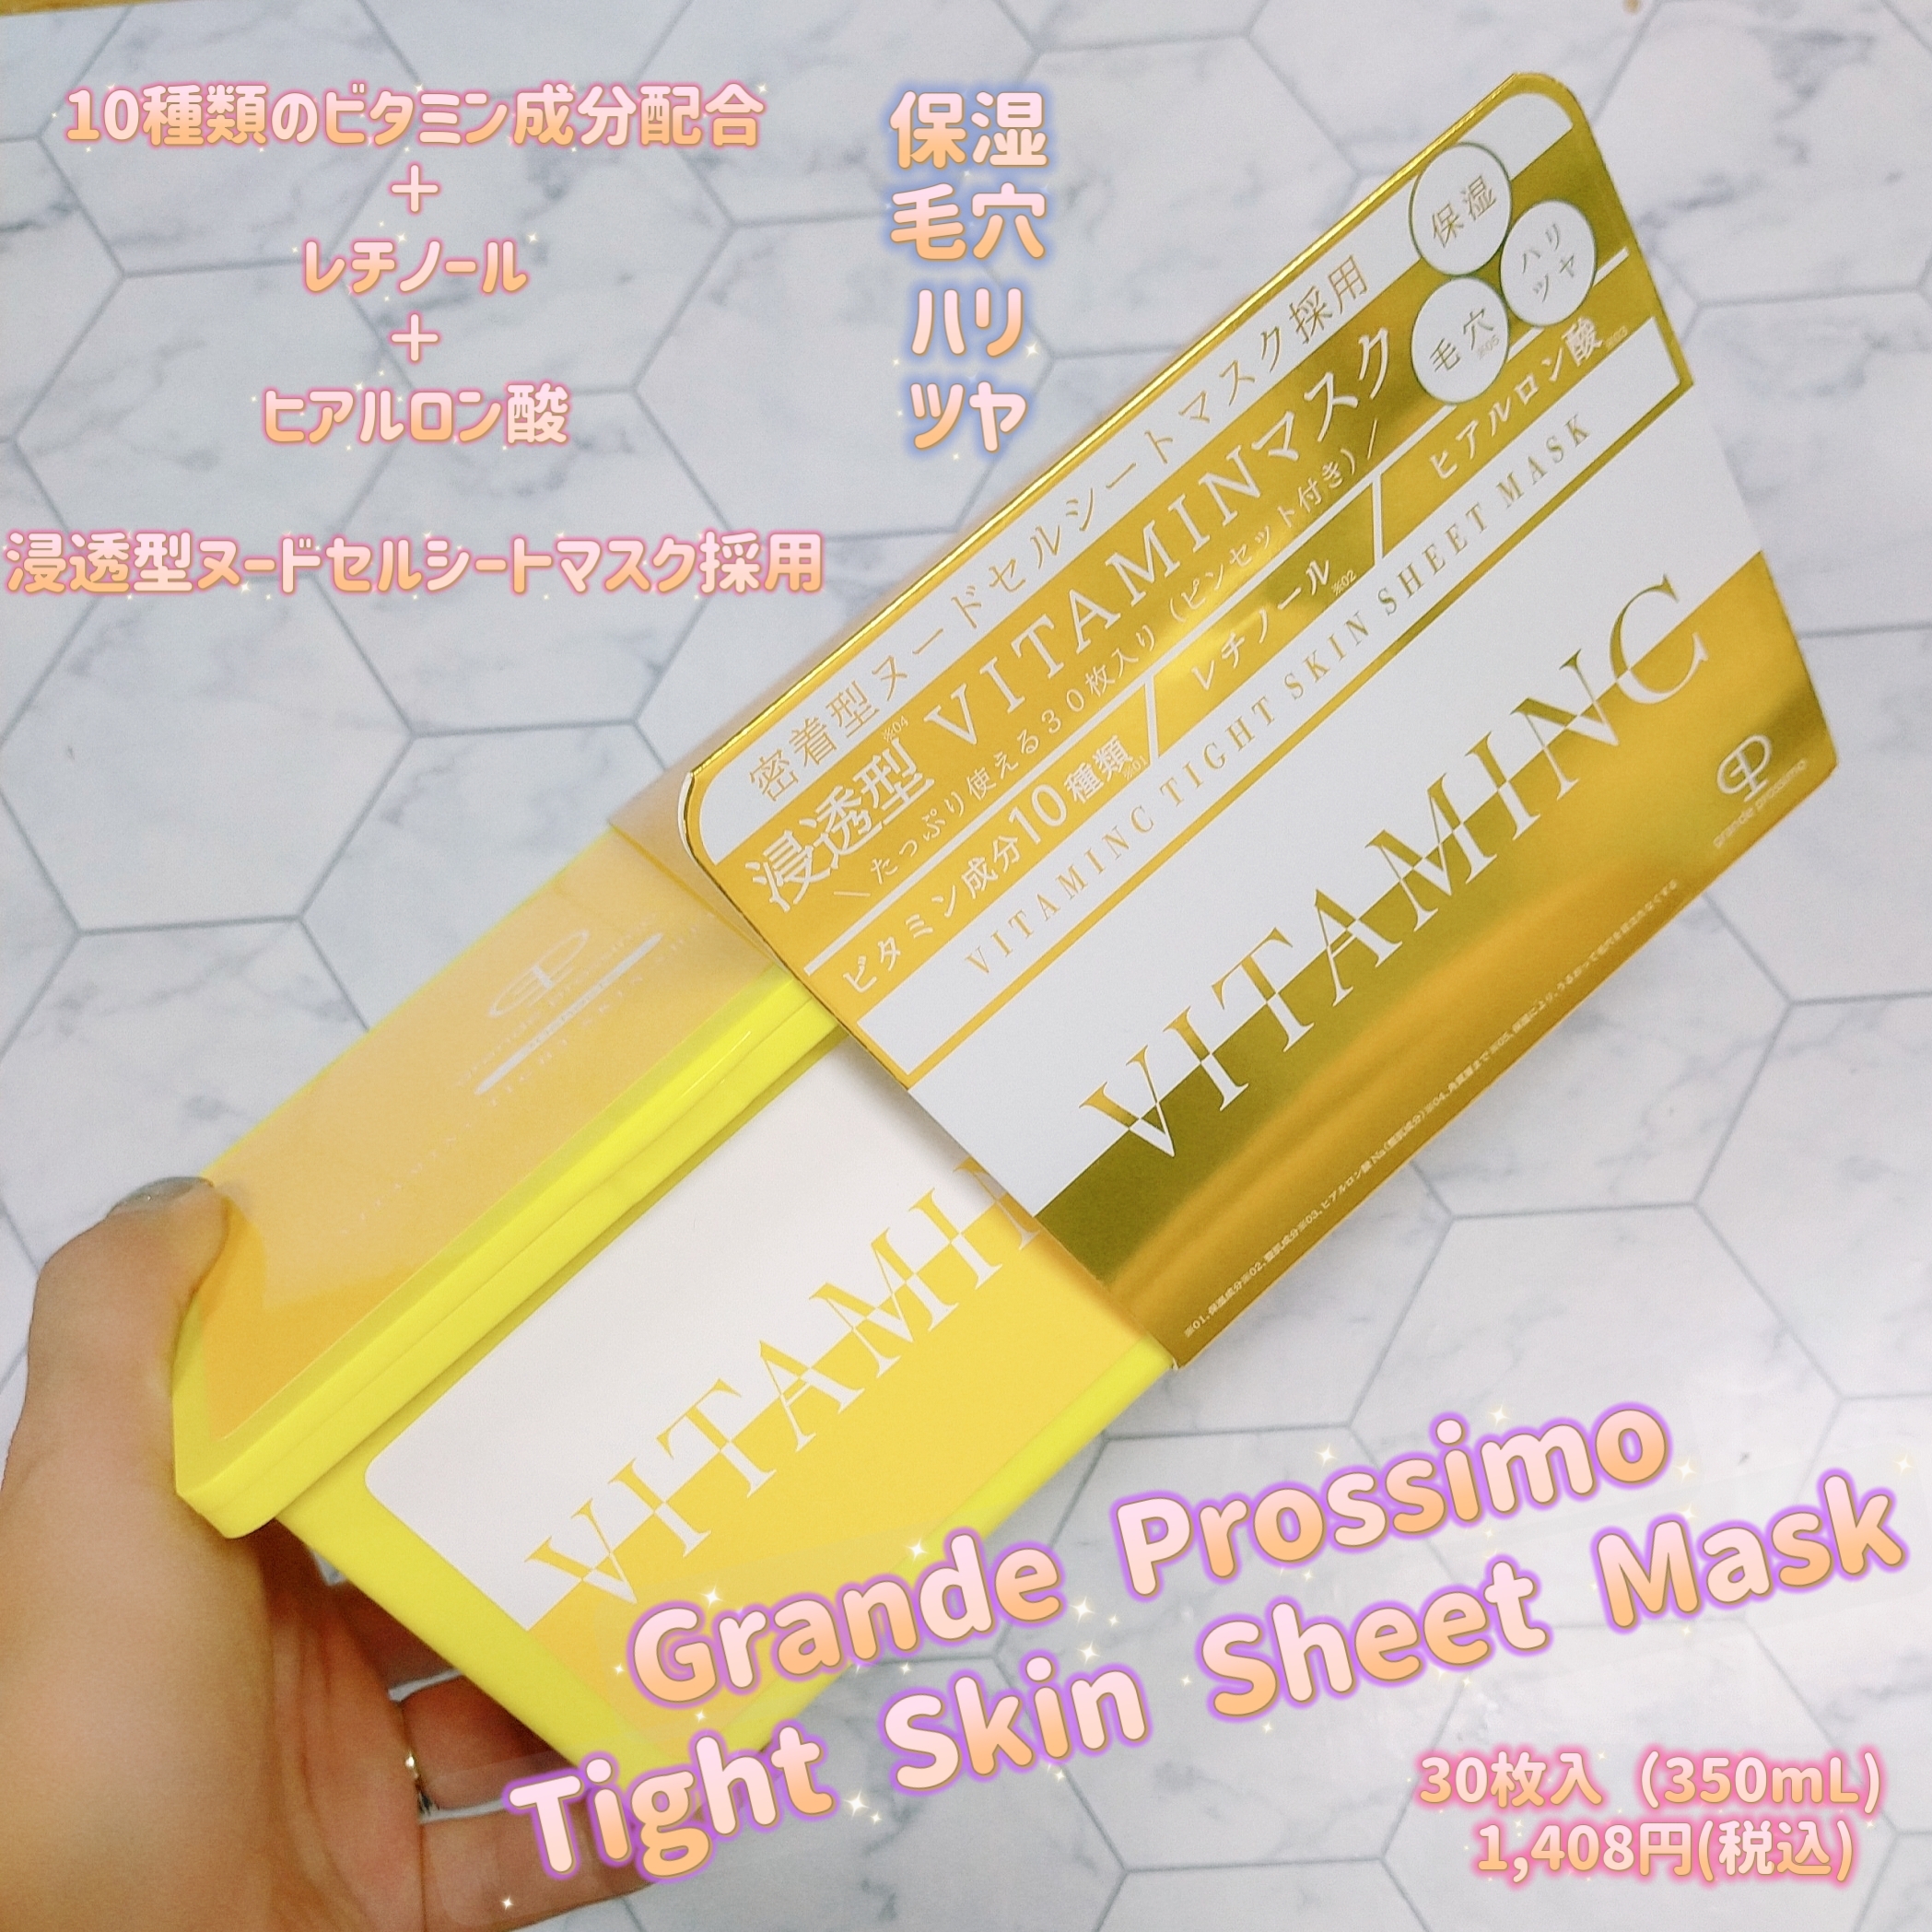 Grande Prossimo VITAMINC Tight Skin Sheet Maskを使ったみこさんのクチコミ画像1